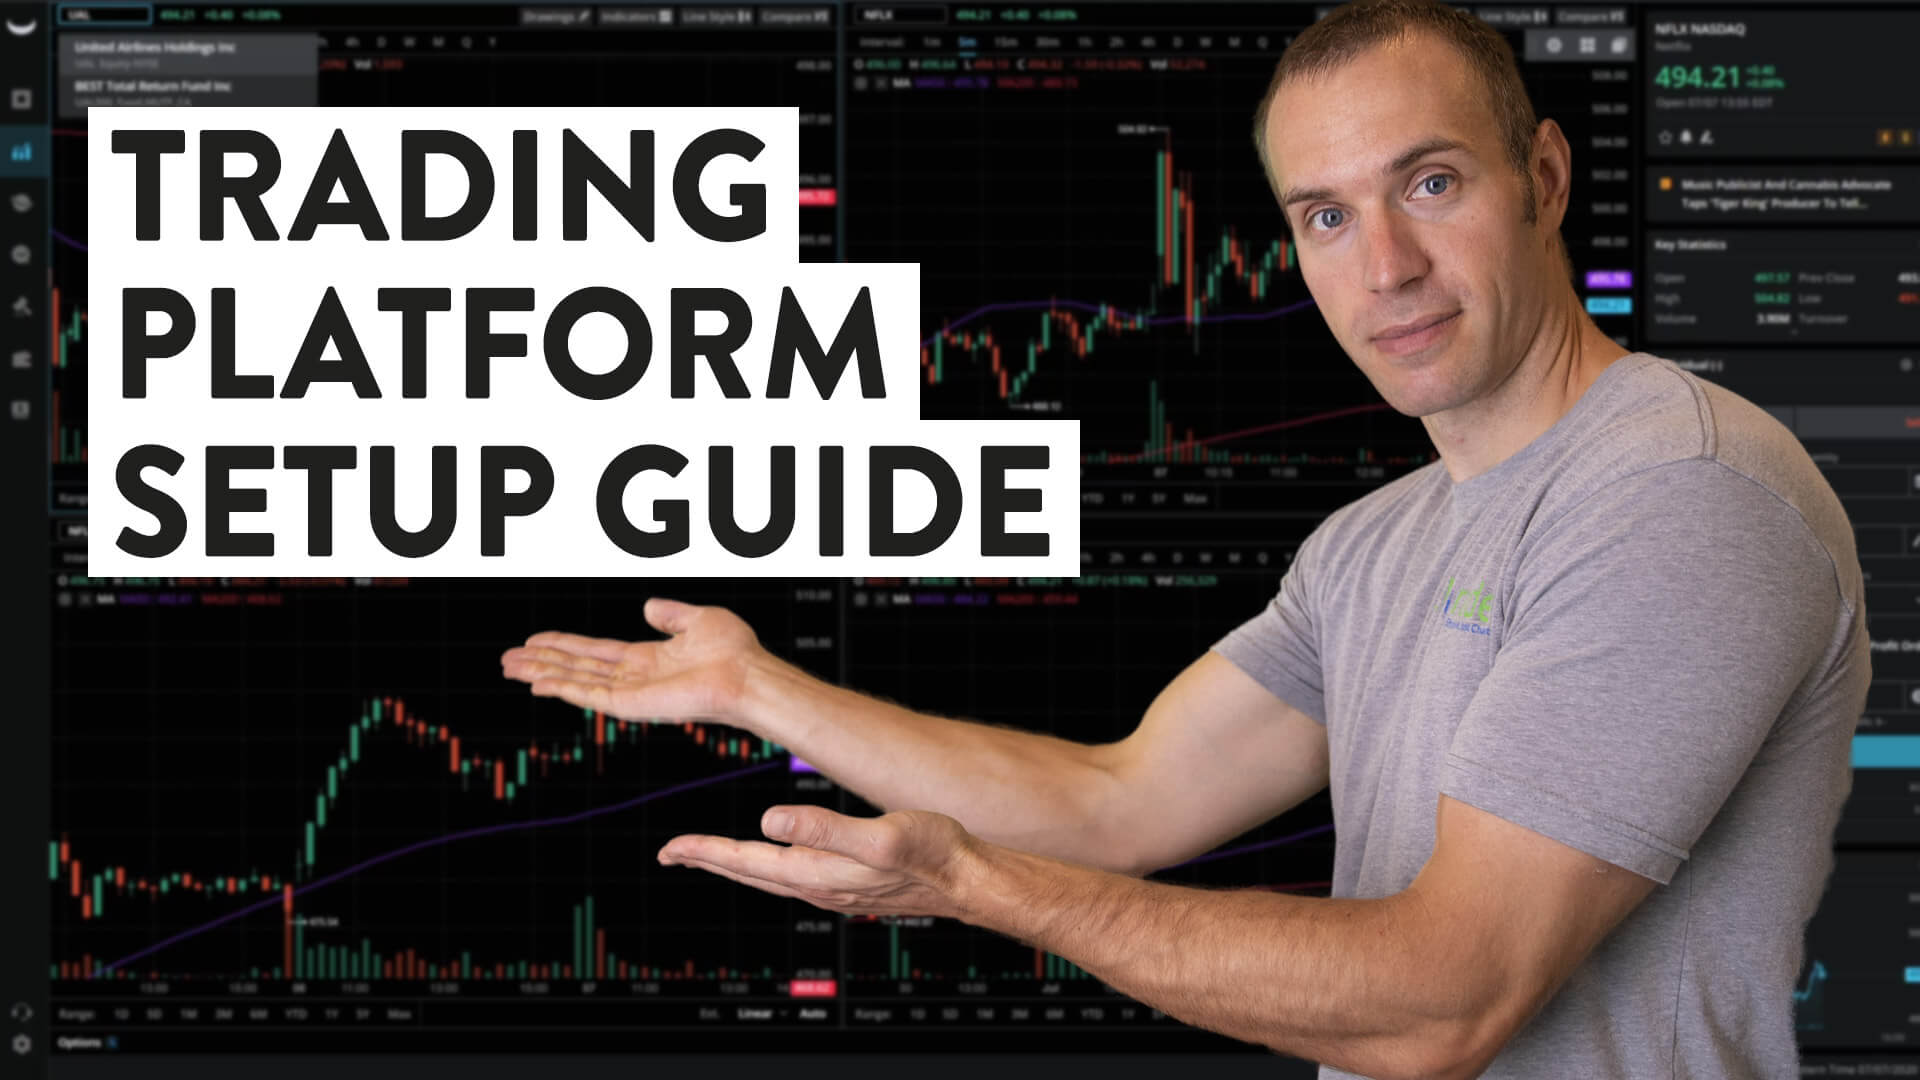 How To Make Money Trading | Stock Trading Platform Setup Guide [2020]